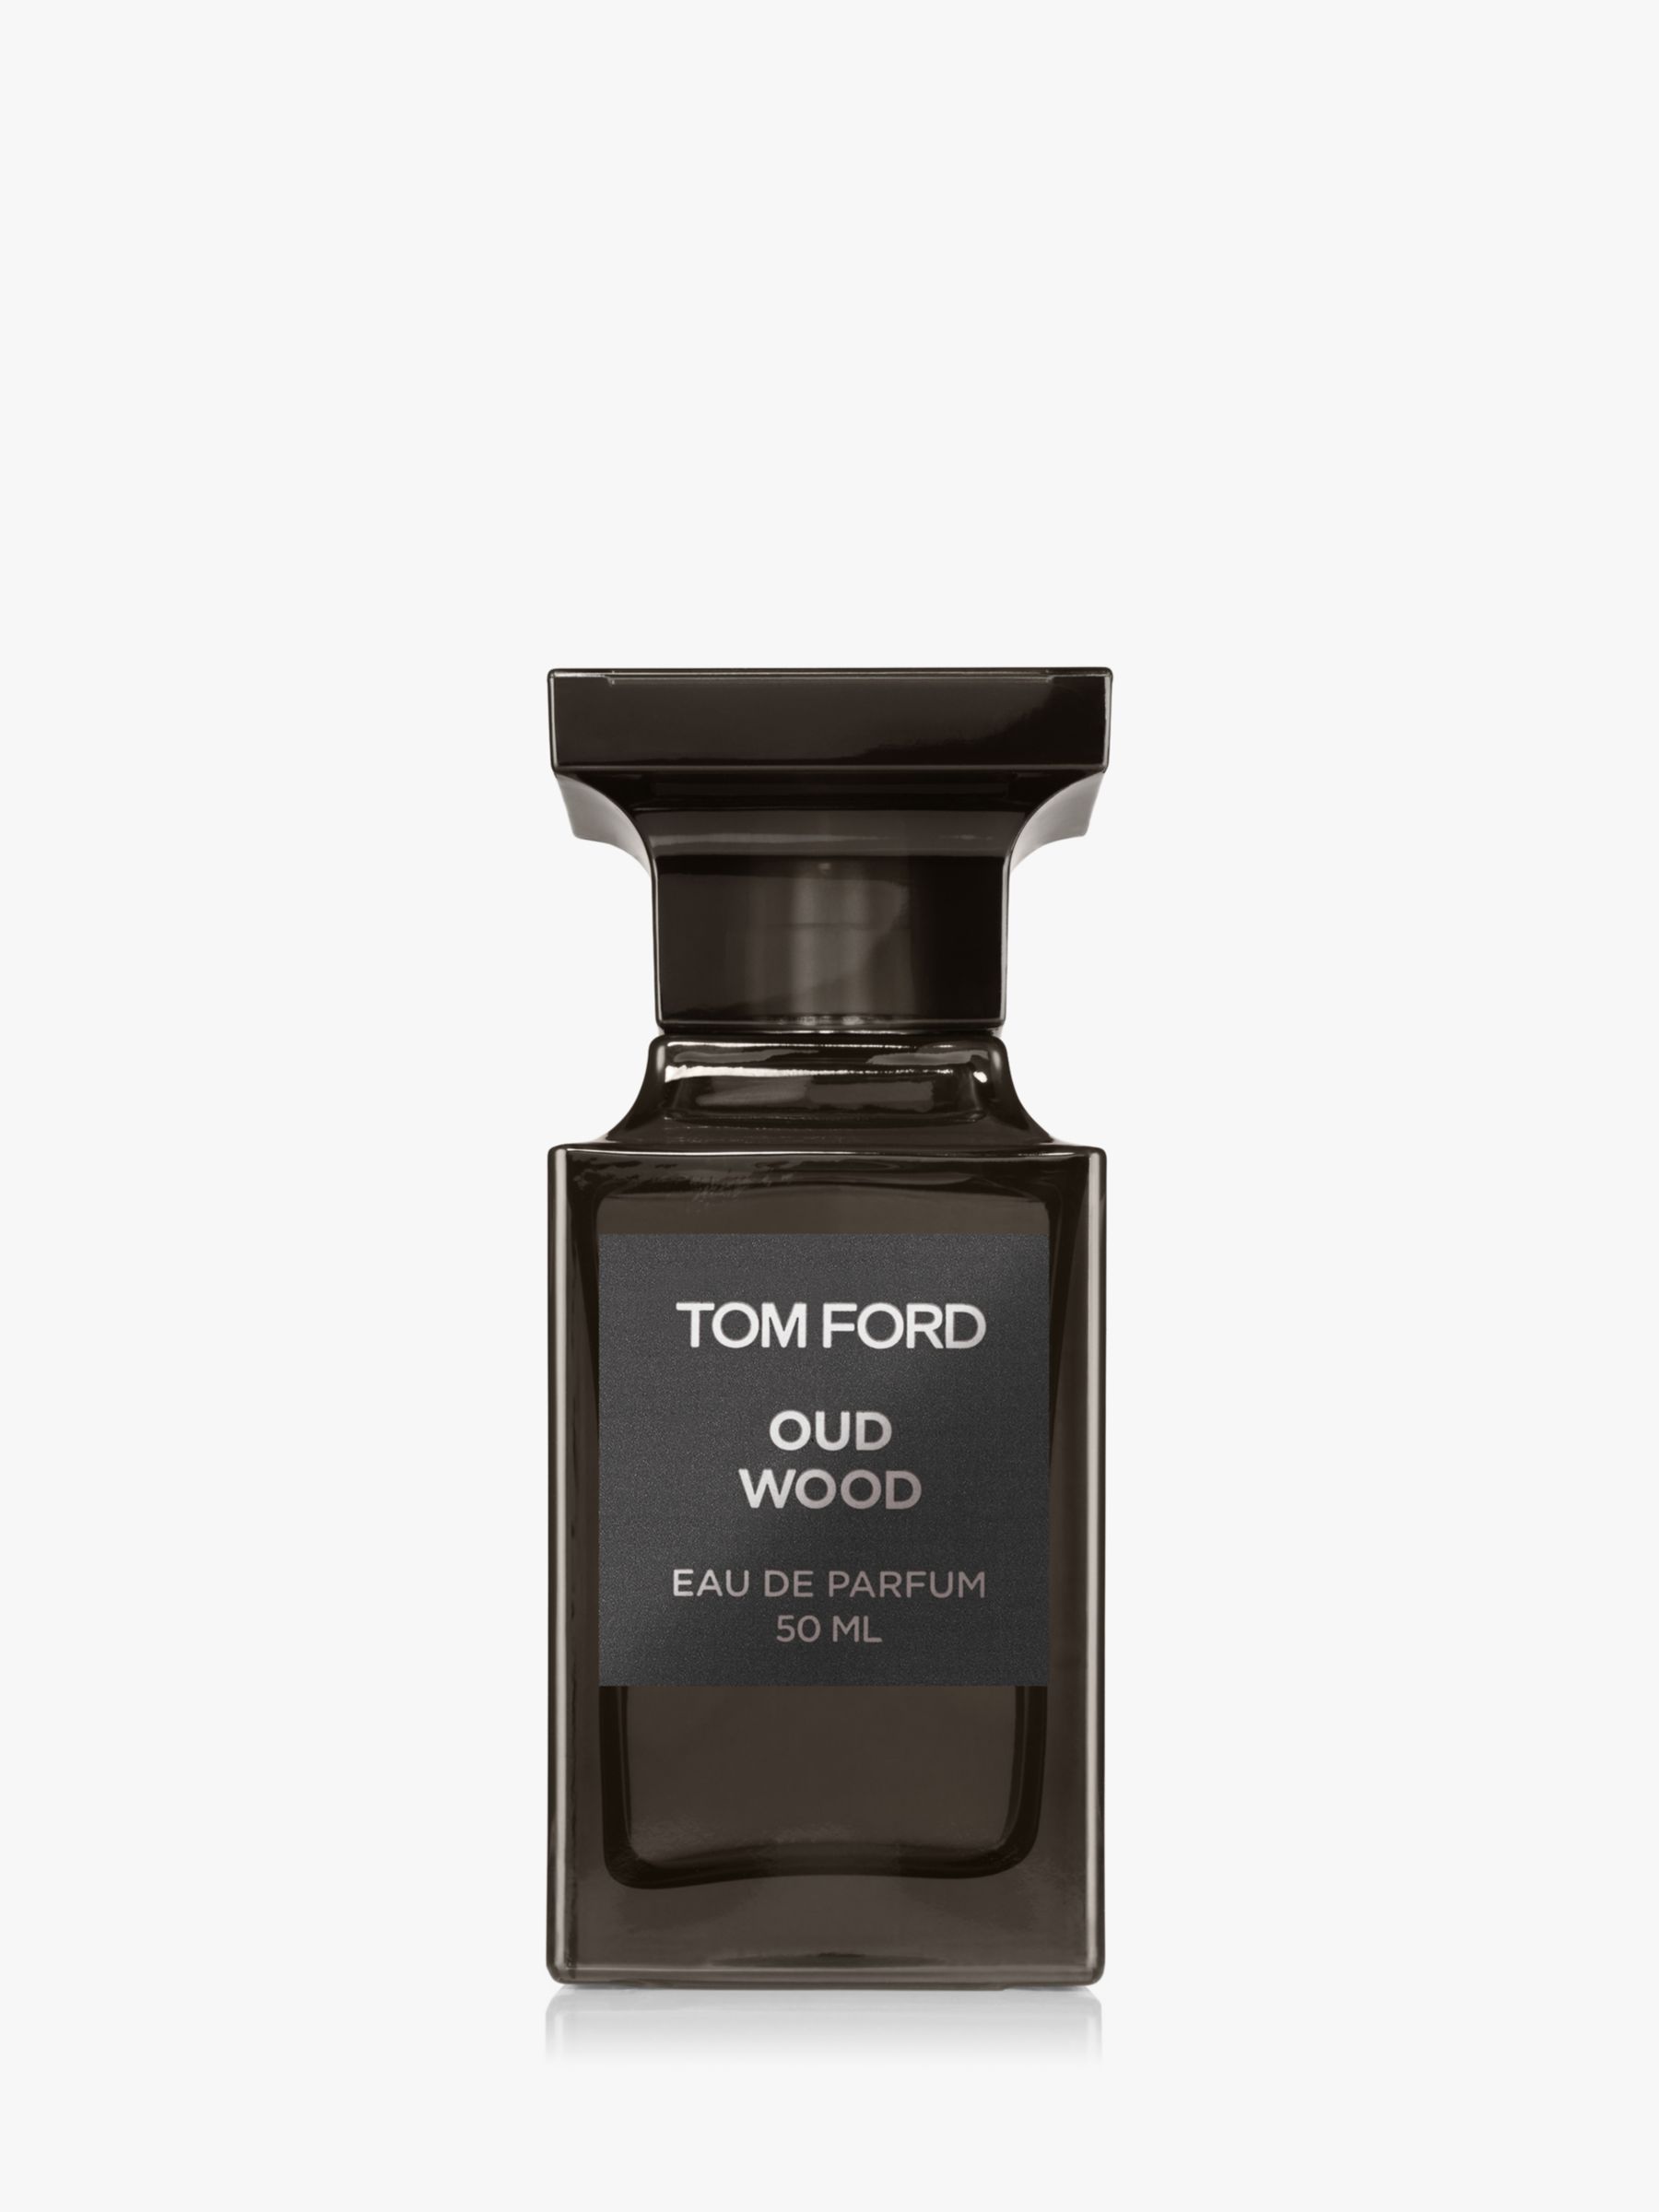 TOM FORD Private Blend Oud Wood Eau De Parfum, 50ml at John Lewis